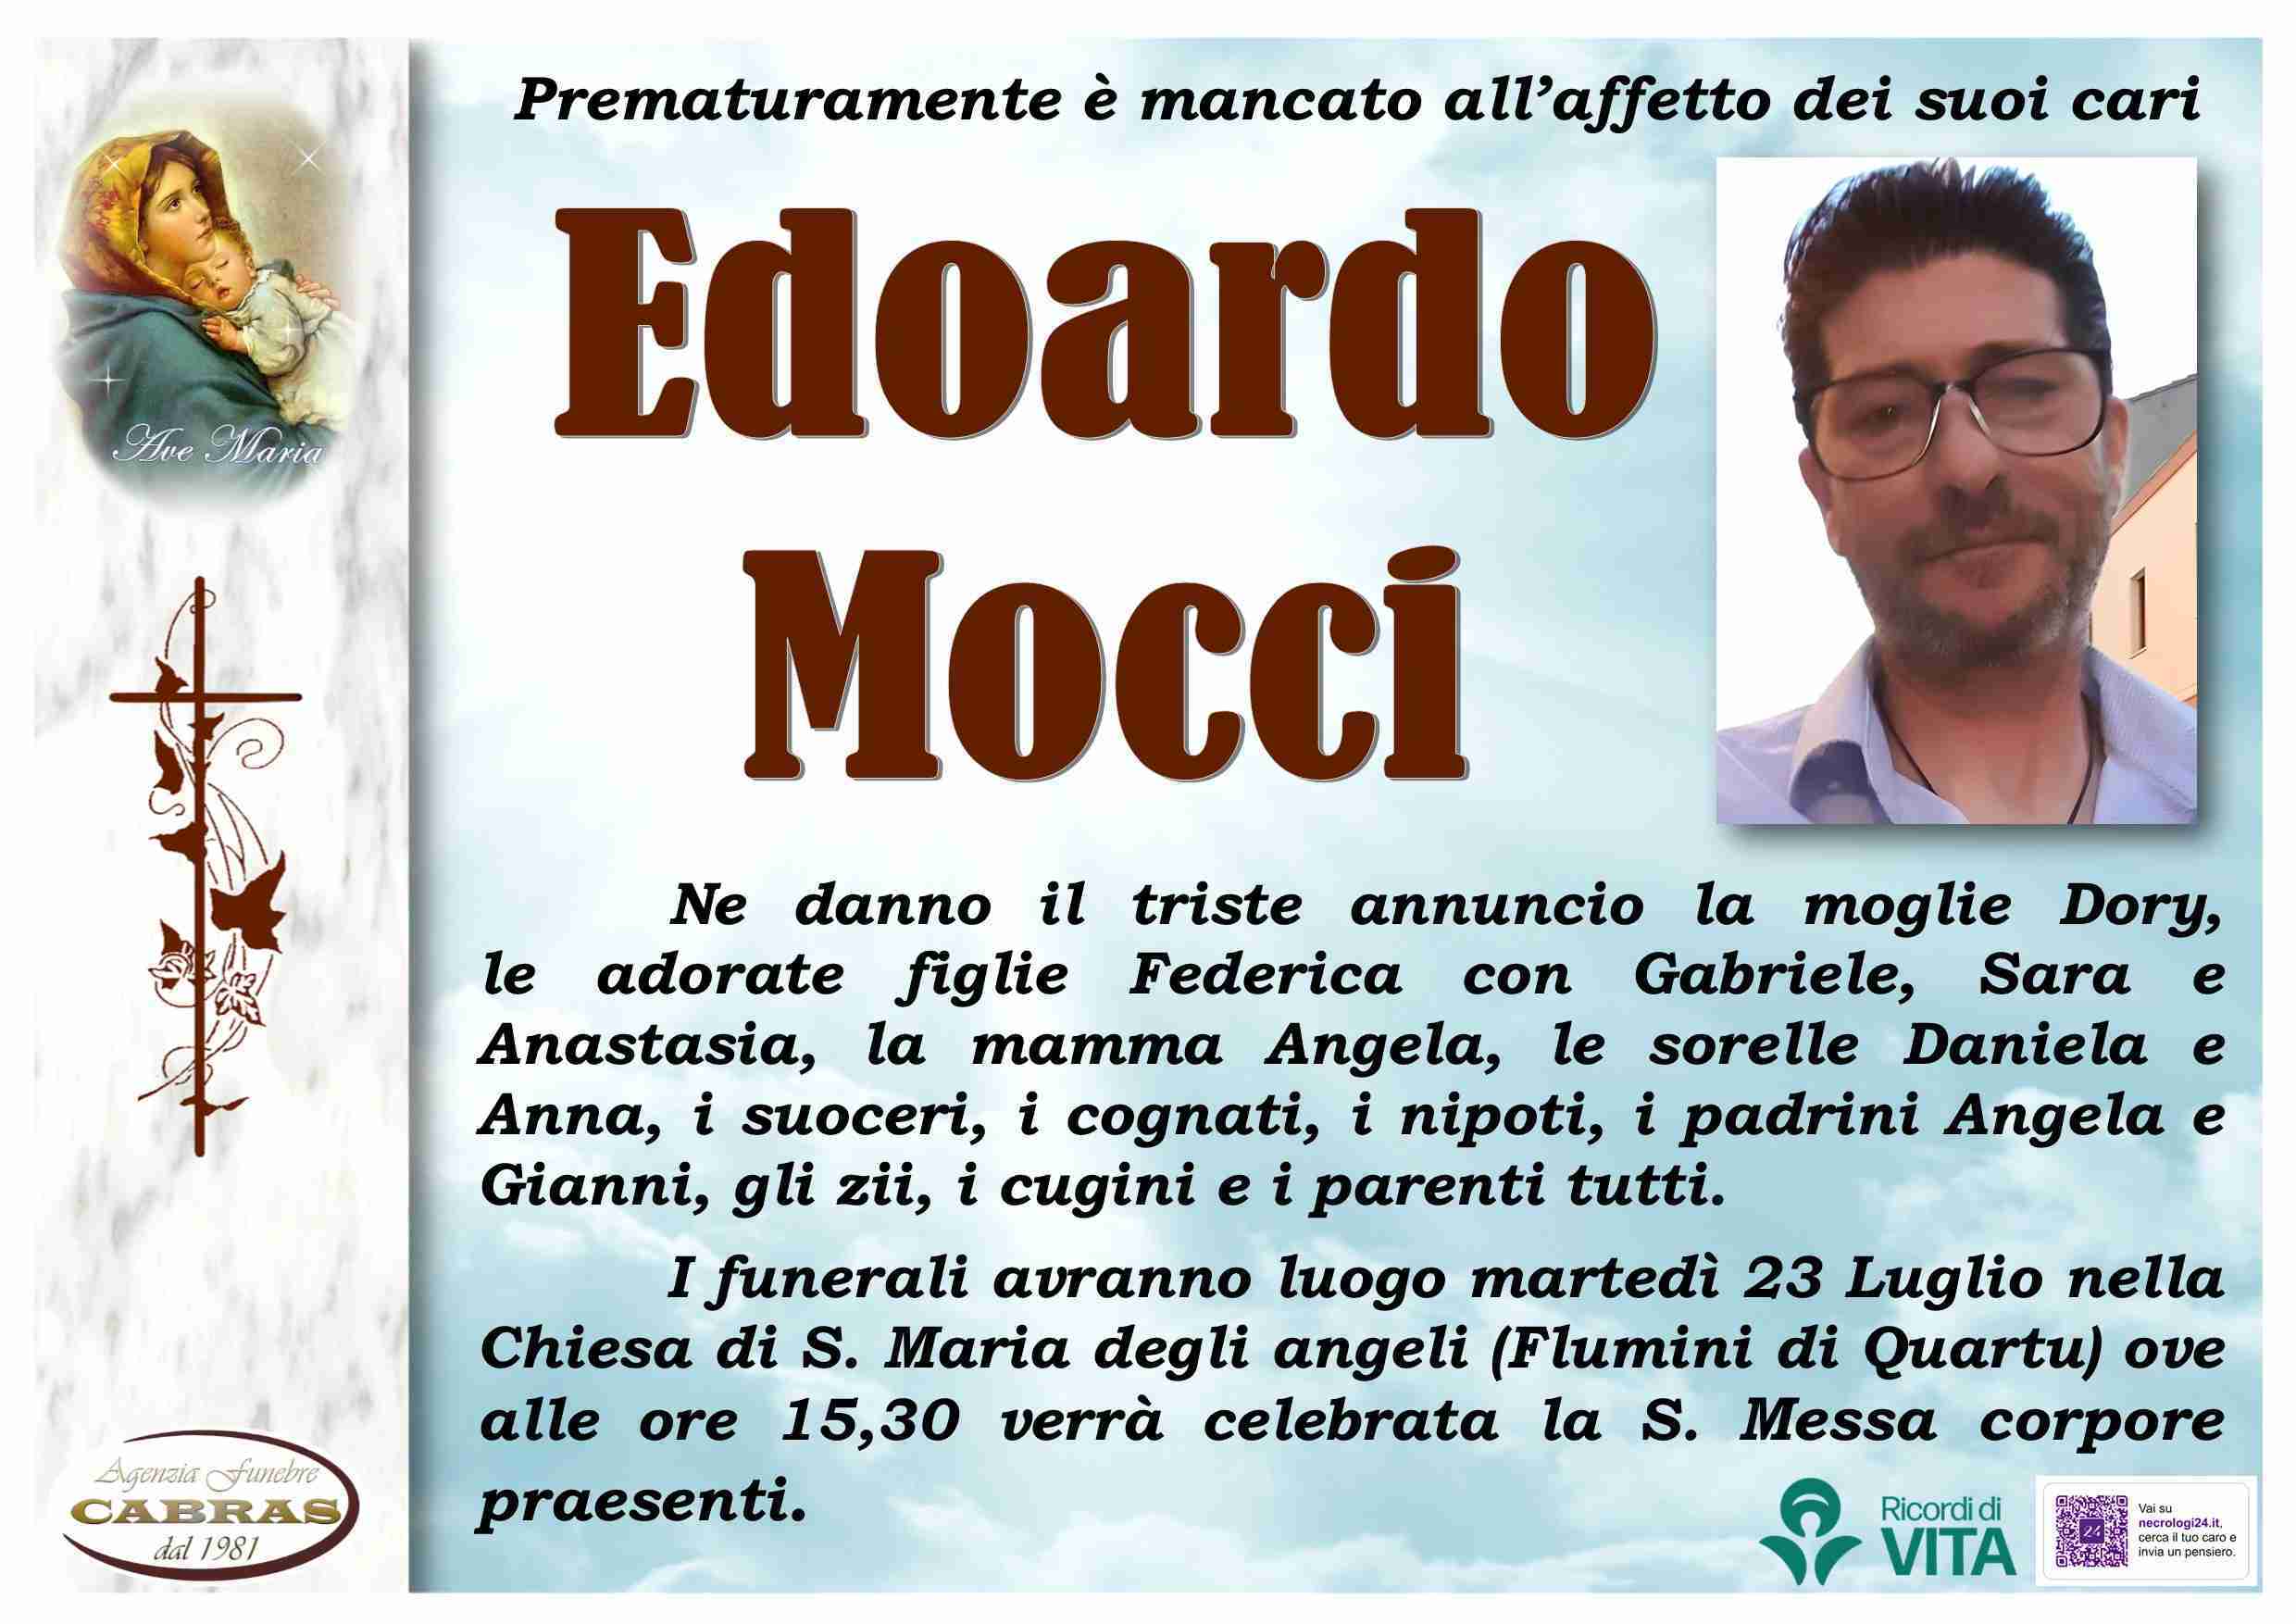 Edoardo Mocci